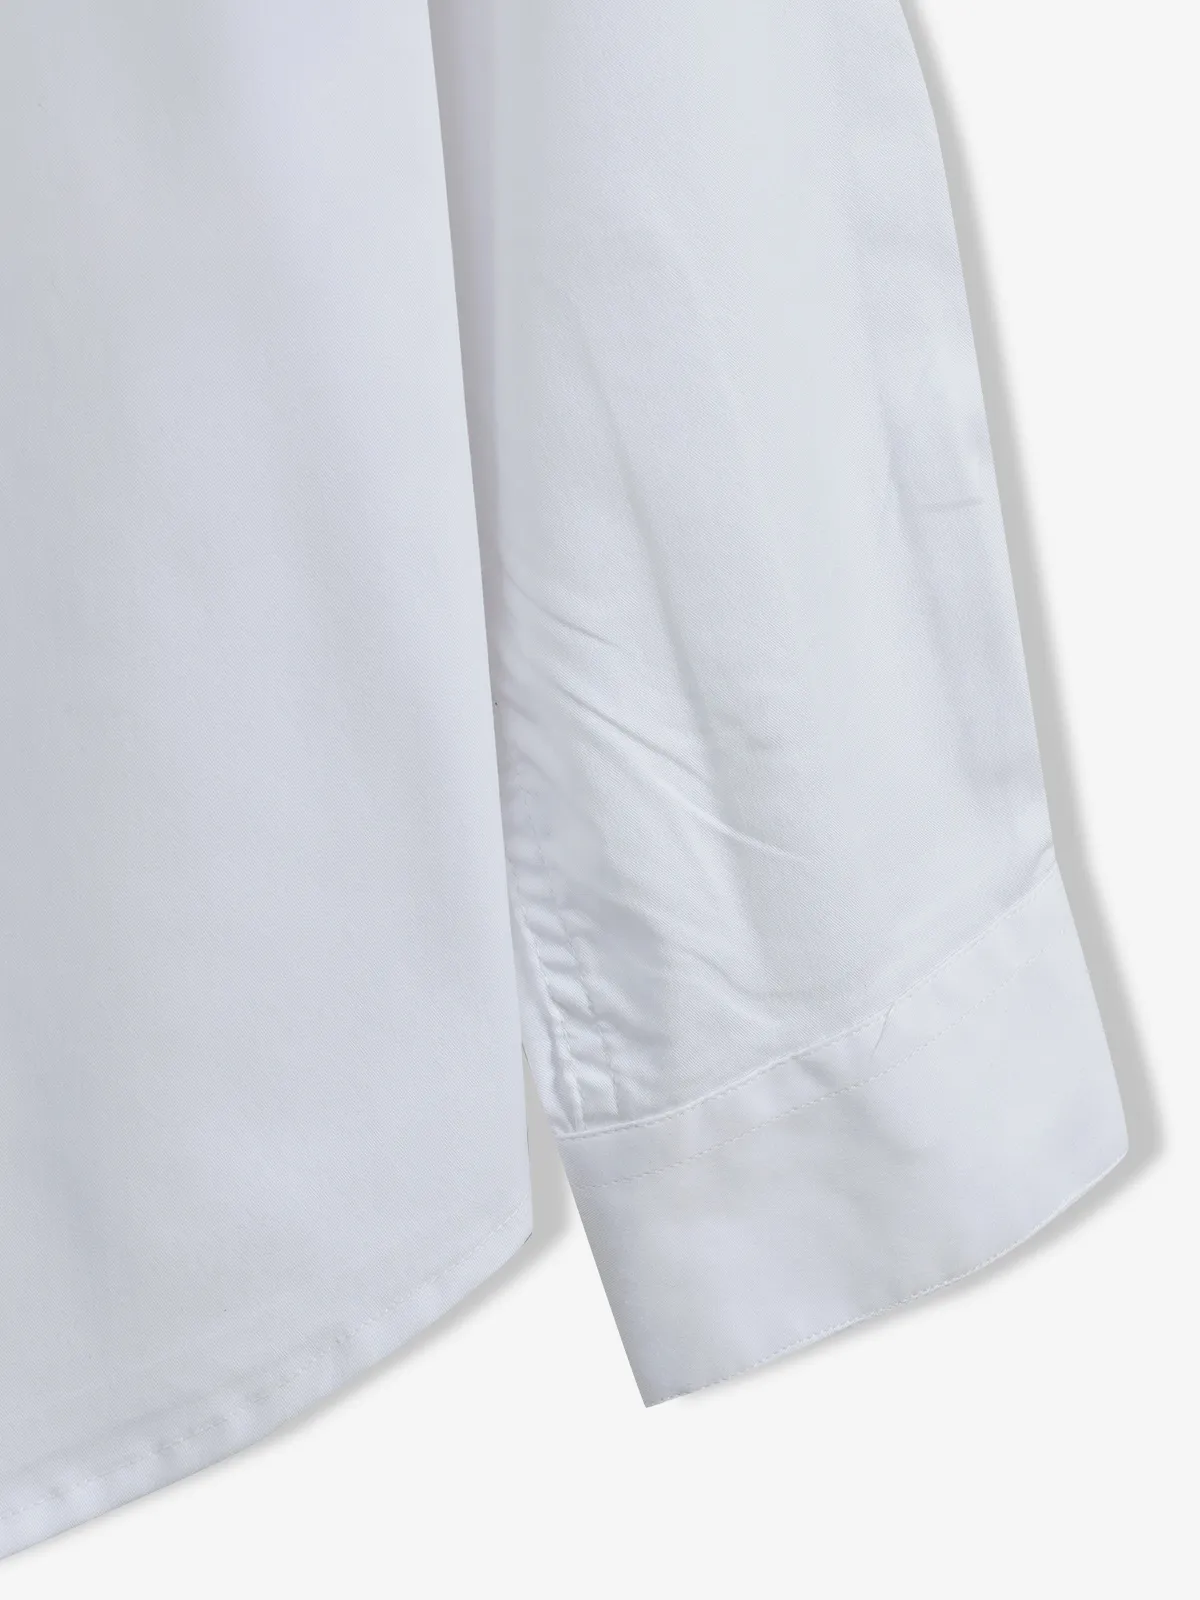 KILLER cotton white floral printed shirt